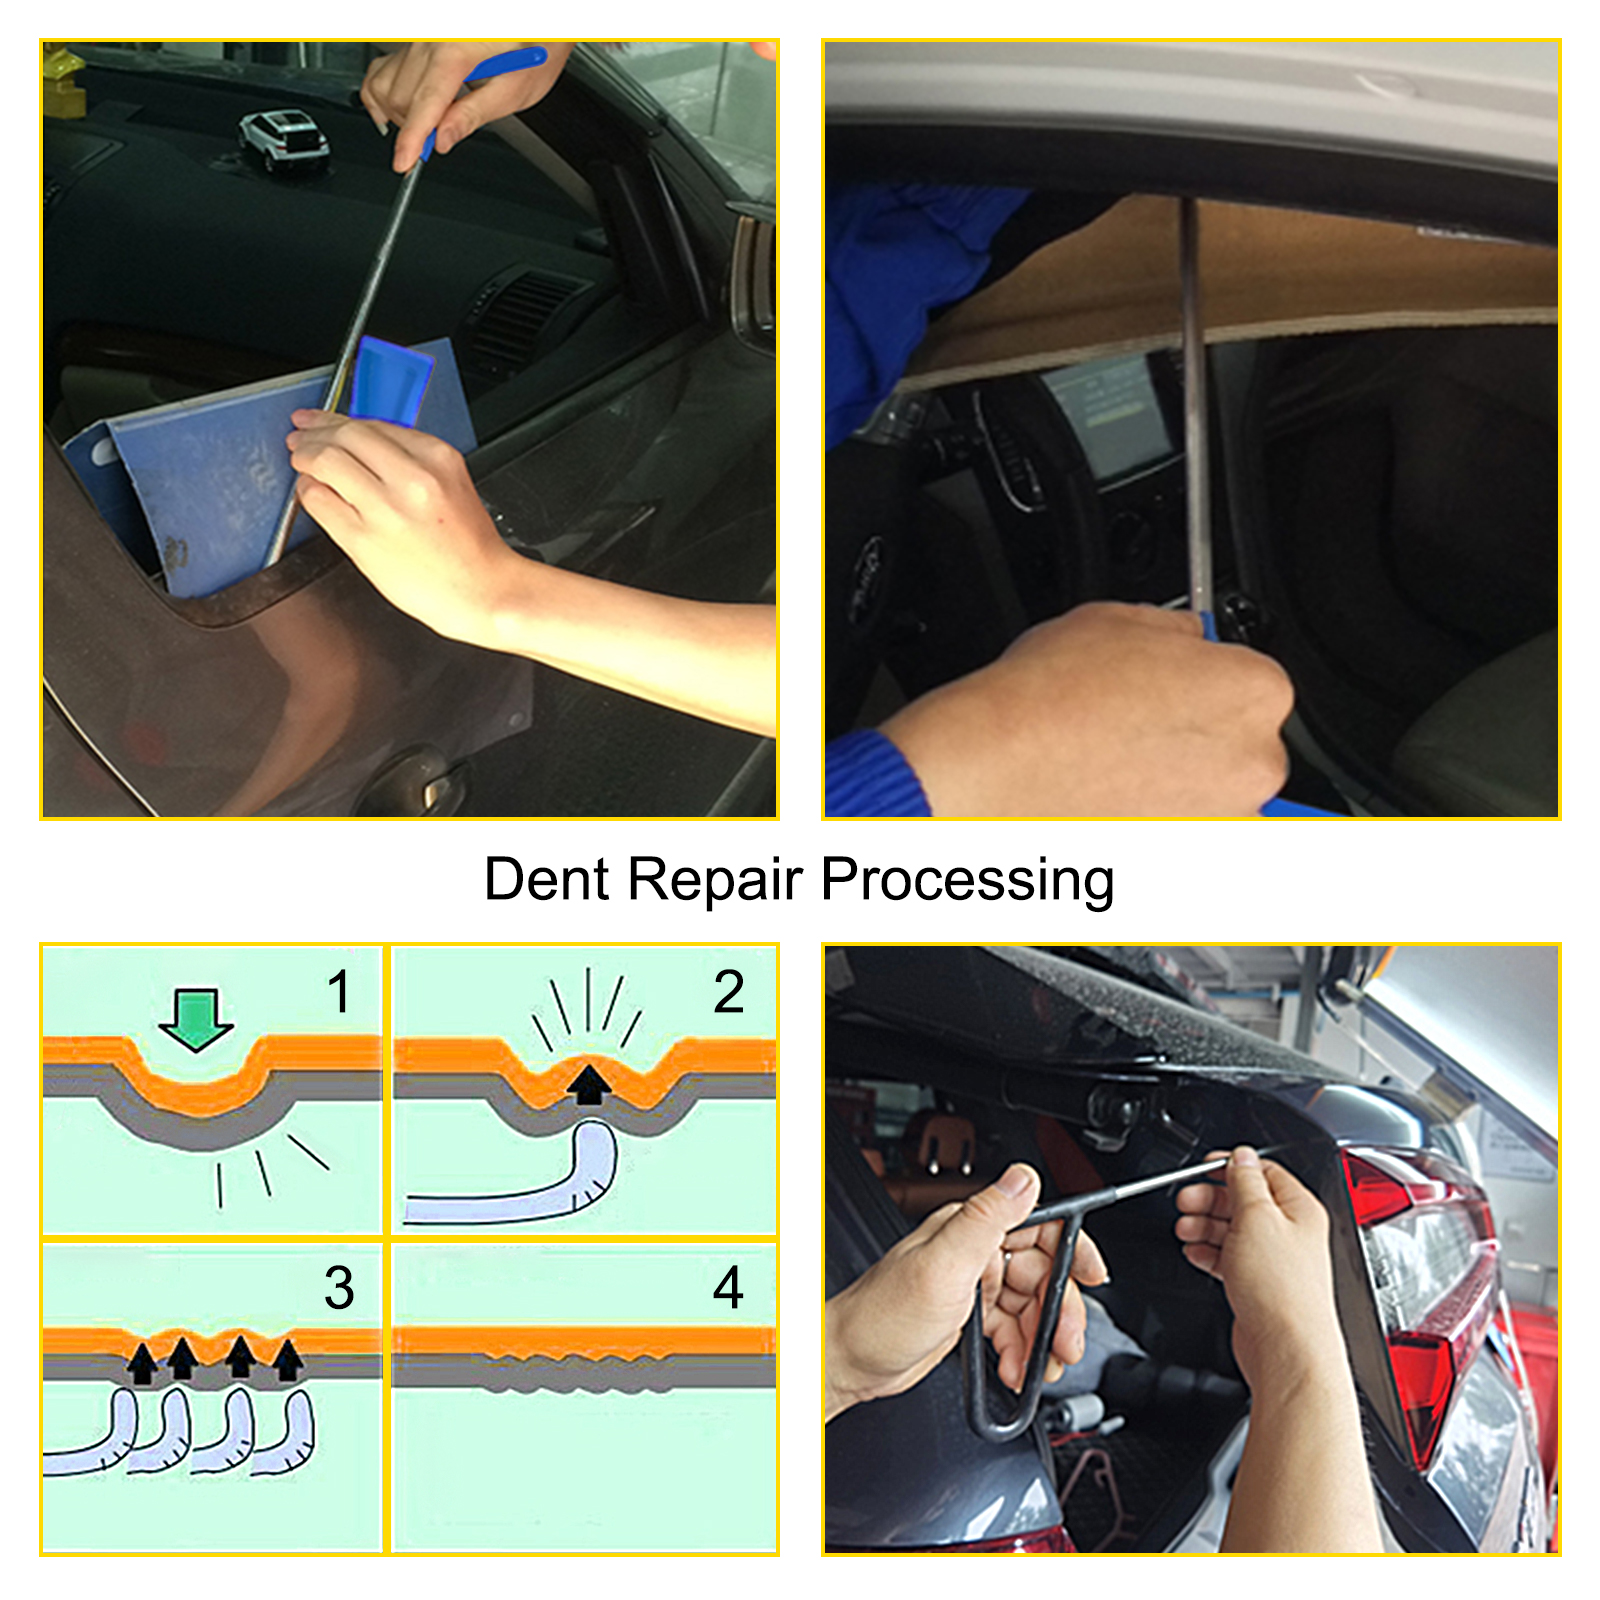 VEVOR Paintless Dent Removal Rods, 89 PCS Paintless Dent Repair Tools,  Golden Lifter Puller Car Dent